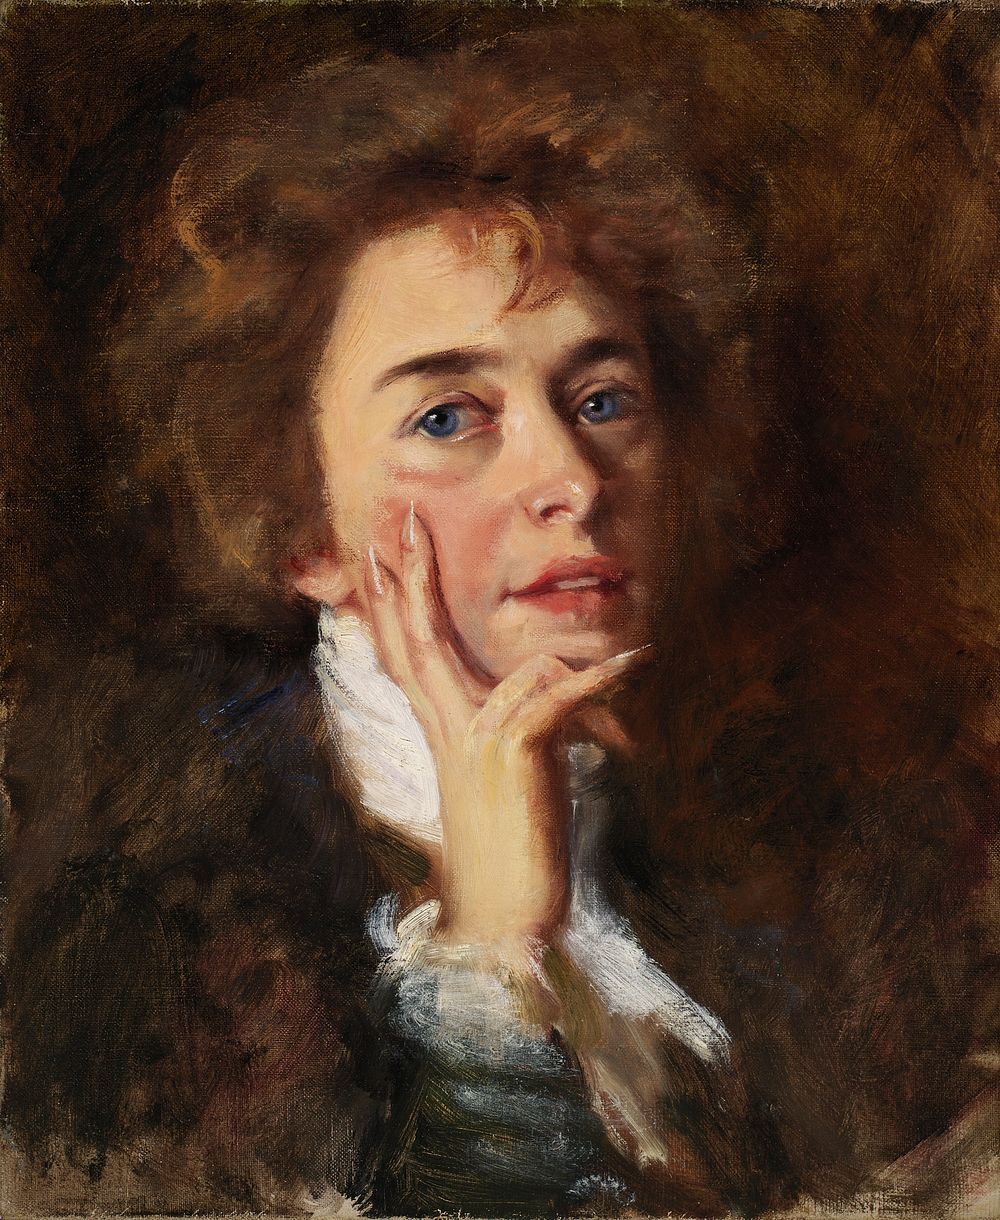 Self-Portrait with Jabot by Alice Pike Barney, born Cincinnati, OH 1857-died Los Angeles, CA 1931